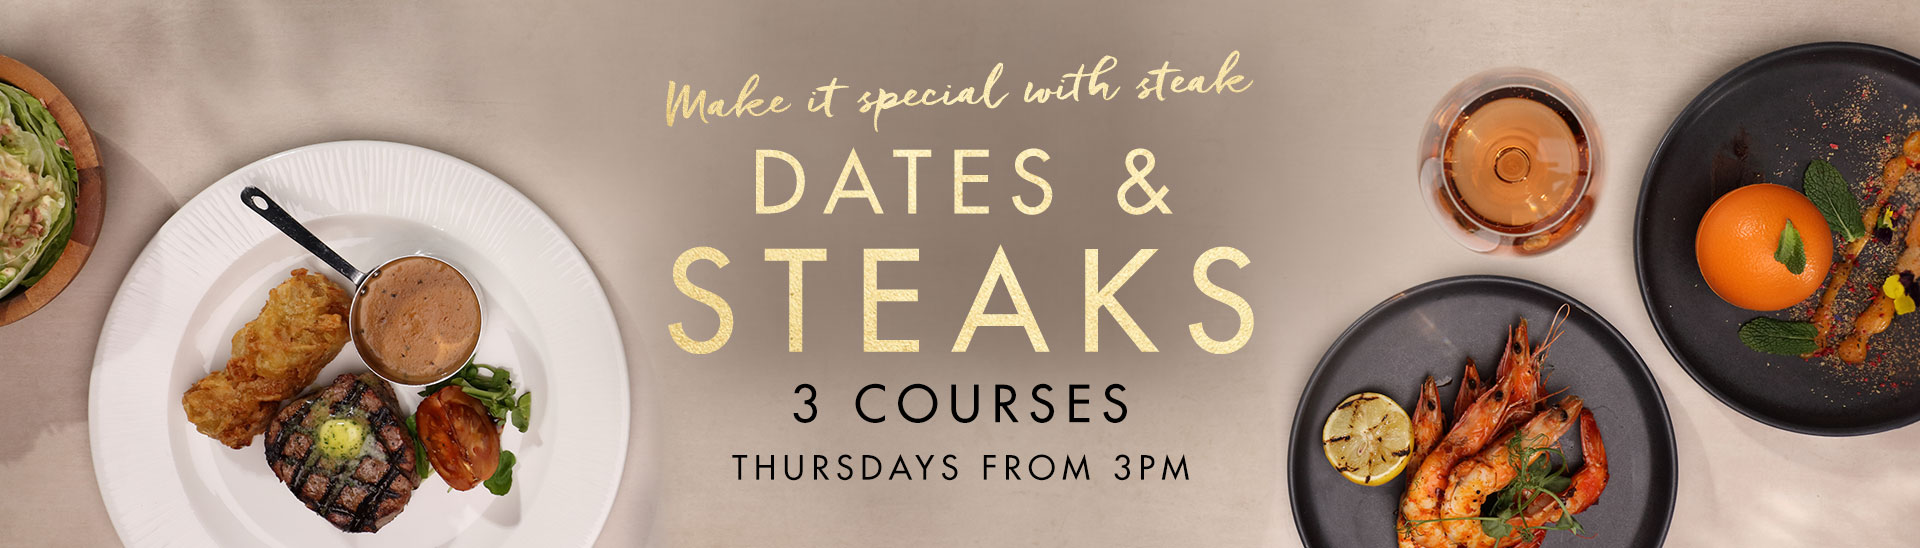 Dates & Steaks at Miller & Carter Aylesbury